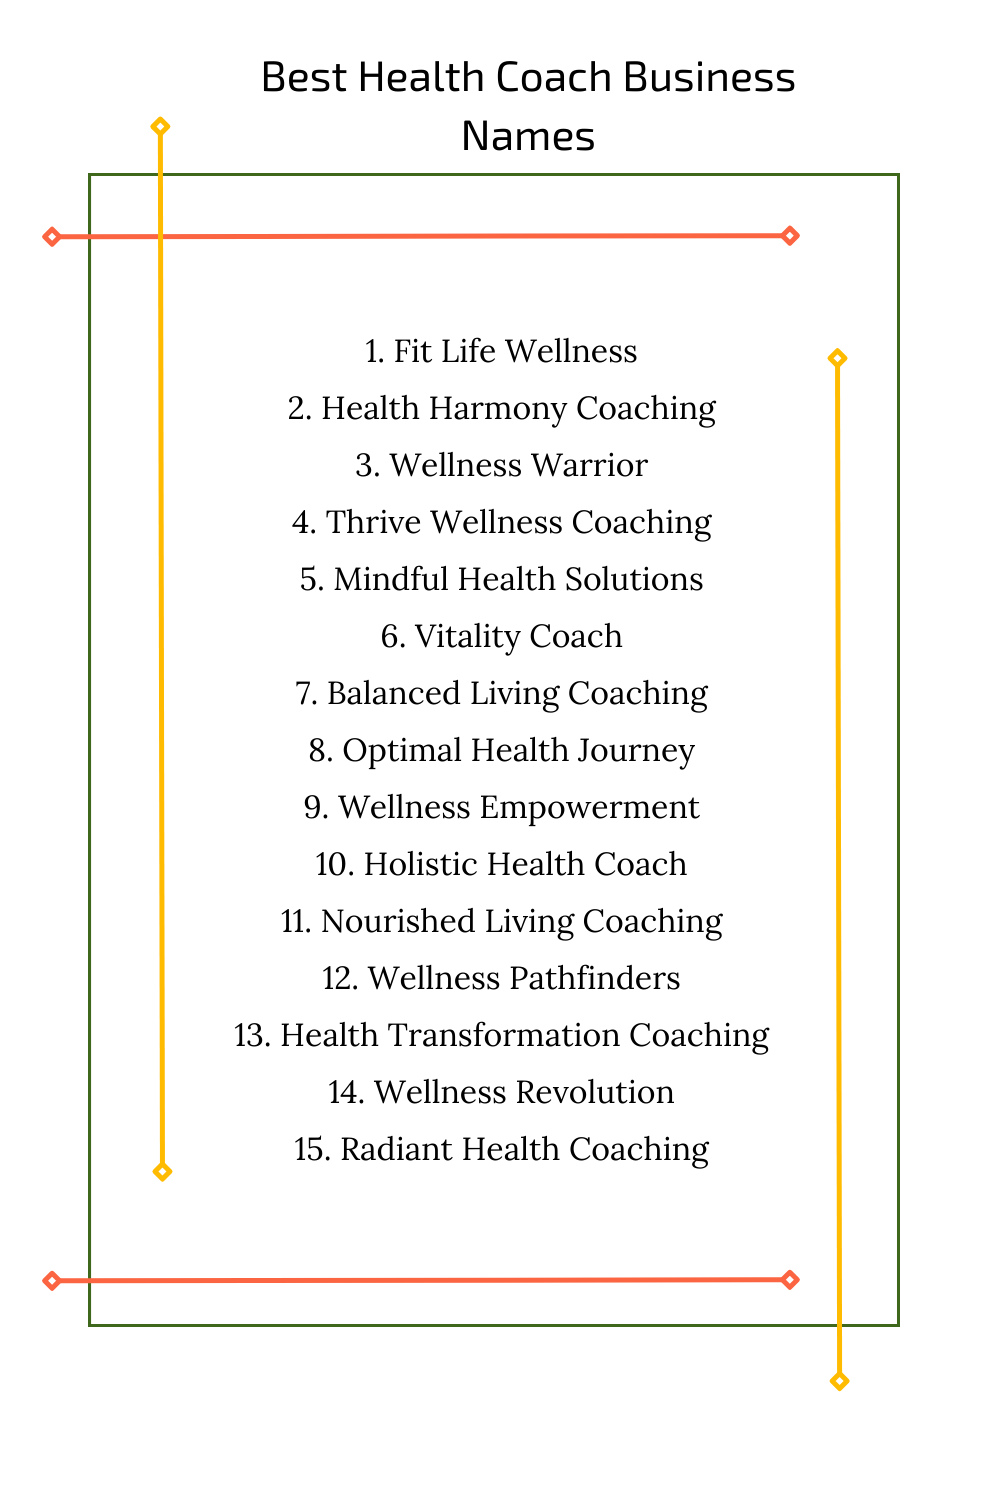 Best Health Coach Business Names